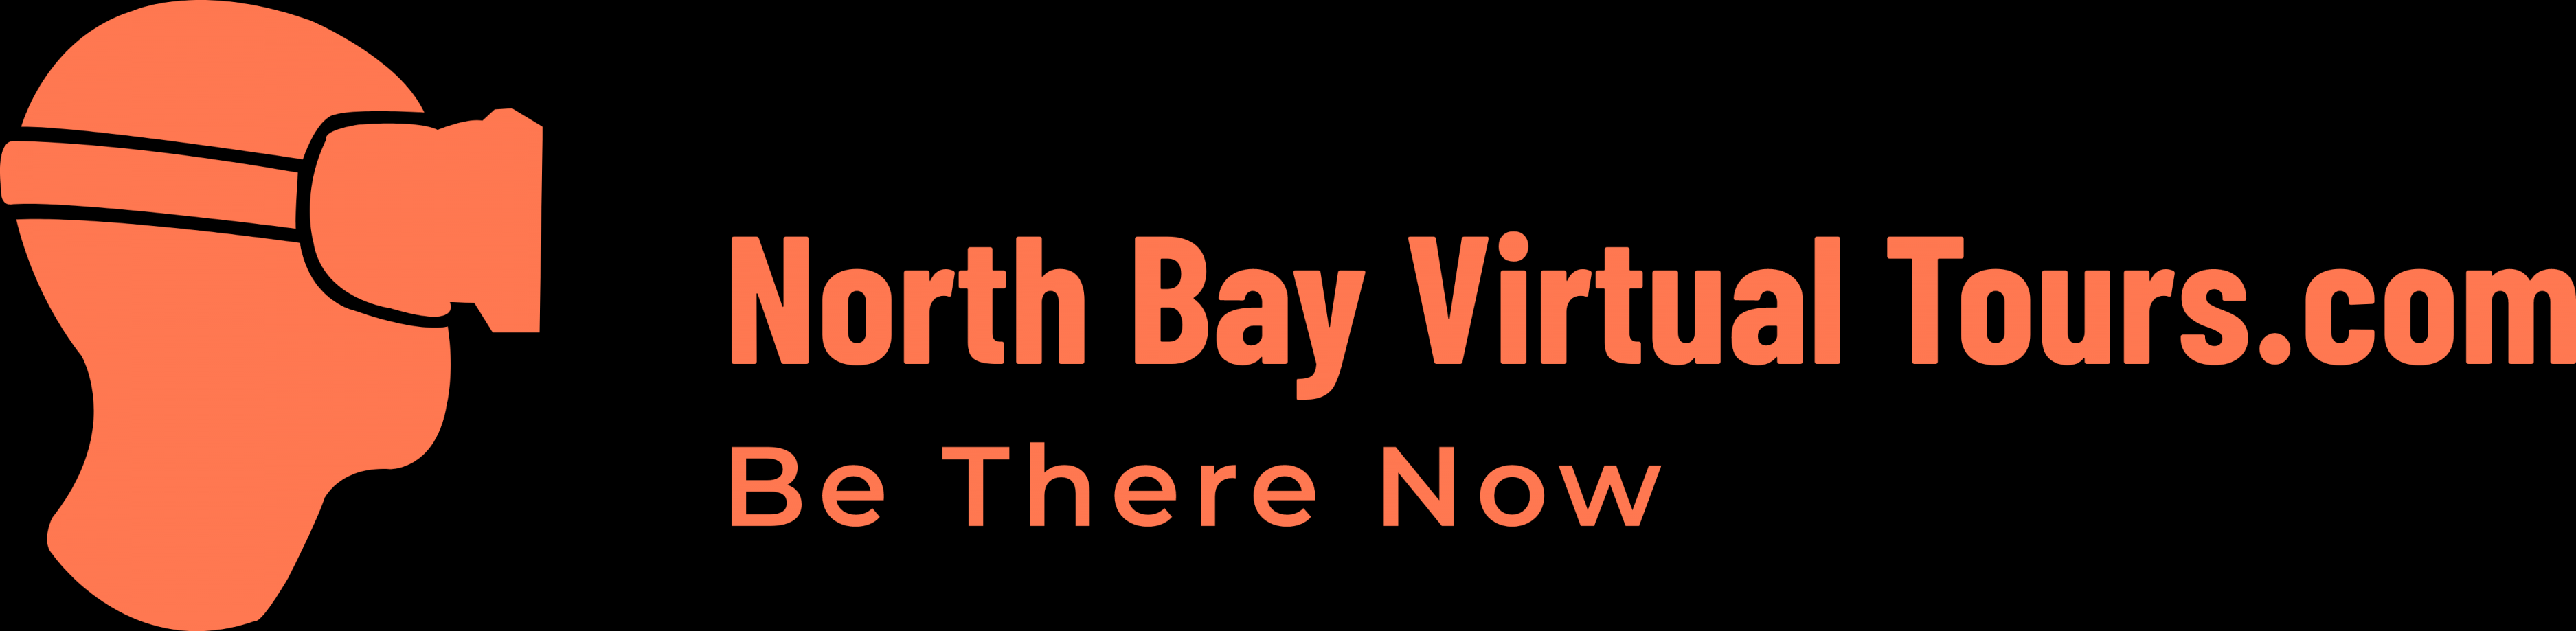 North Bay Virtual Tours